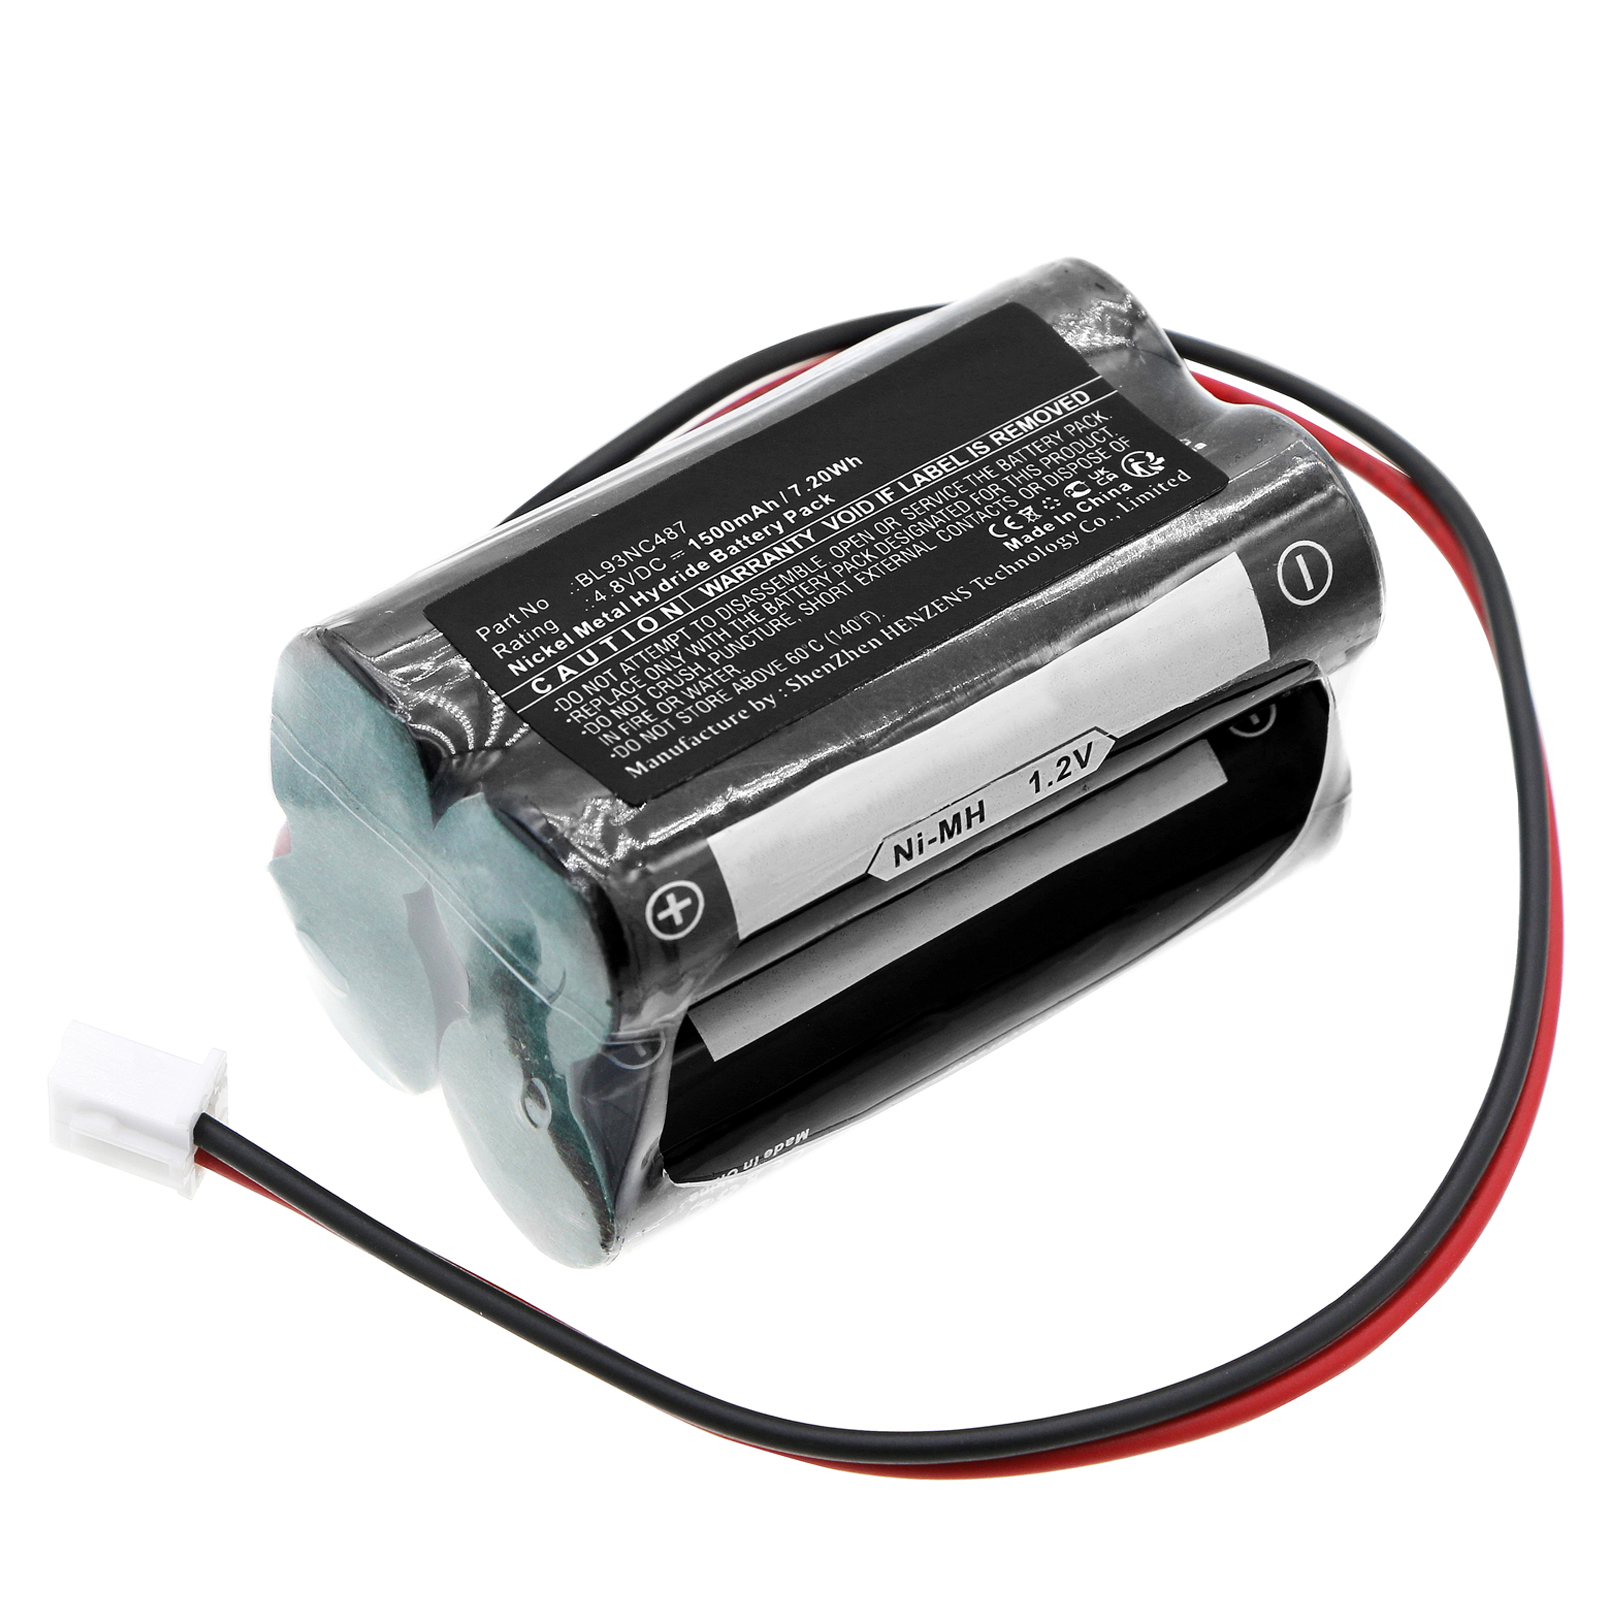 Batteries for LithoniaEmergency Lighting